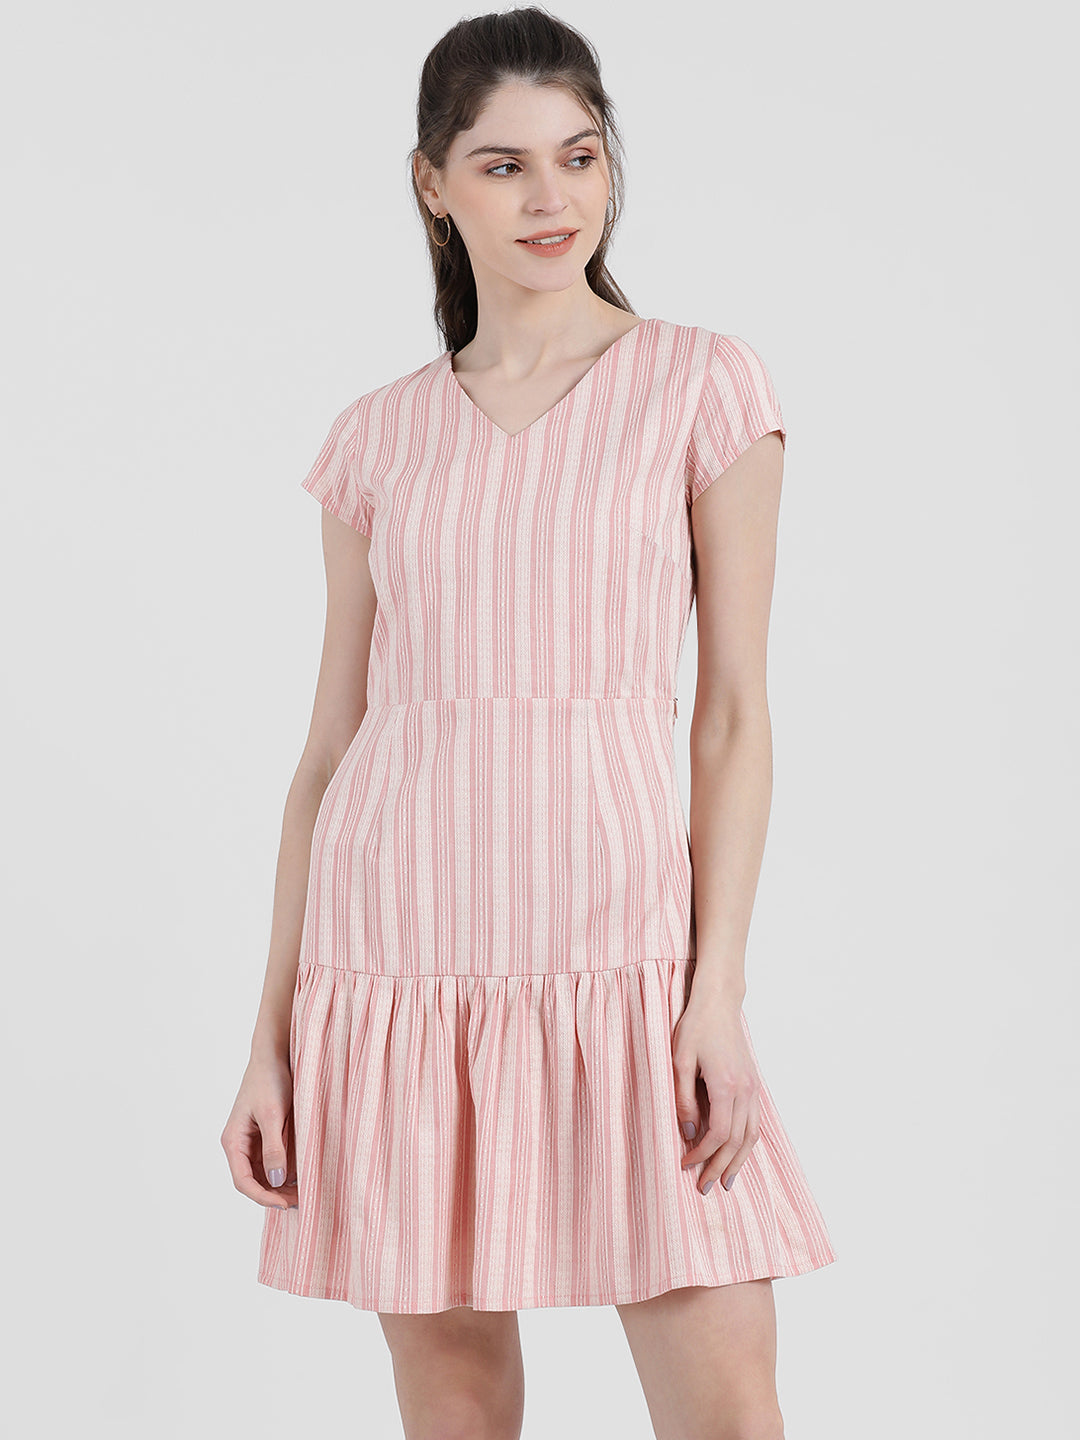 Zink London Women's Striped Peplum Dress